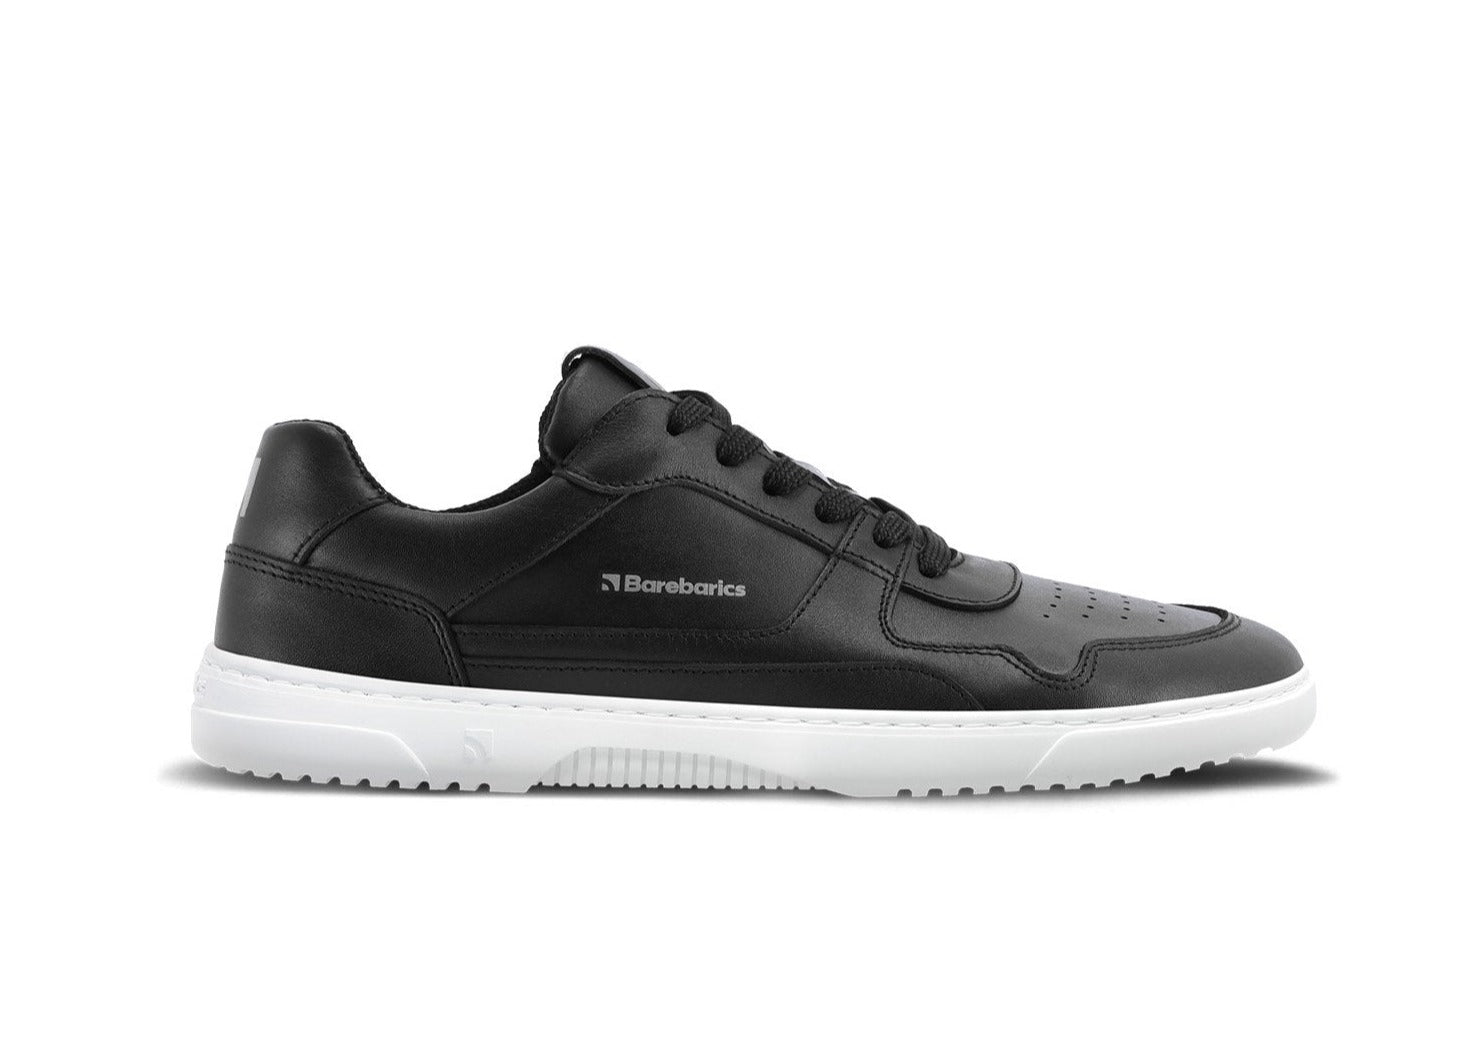 Barefoot Sneakers Barebarics Zing - Black & White - Leather 1 OzBarefoot Australia